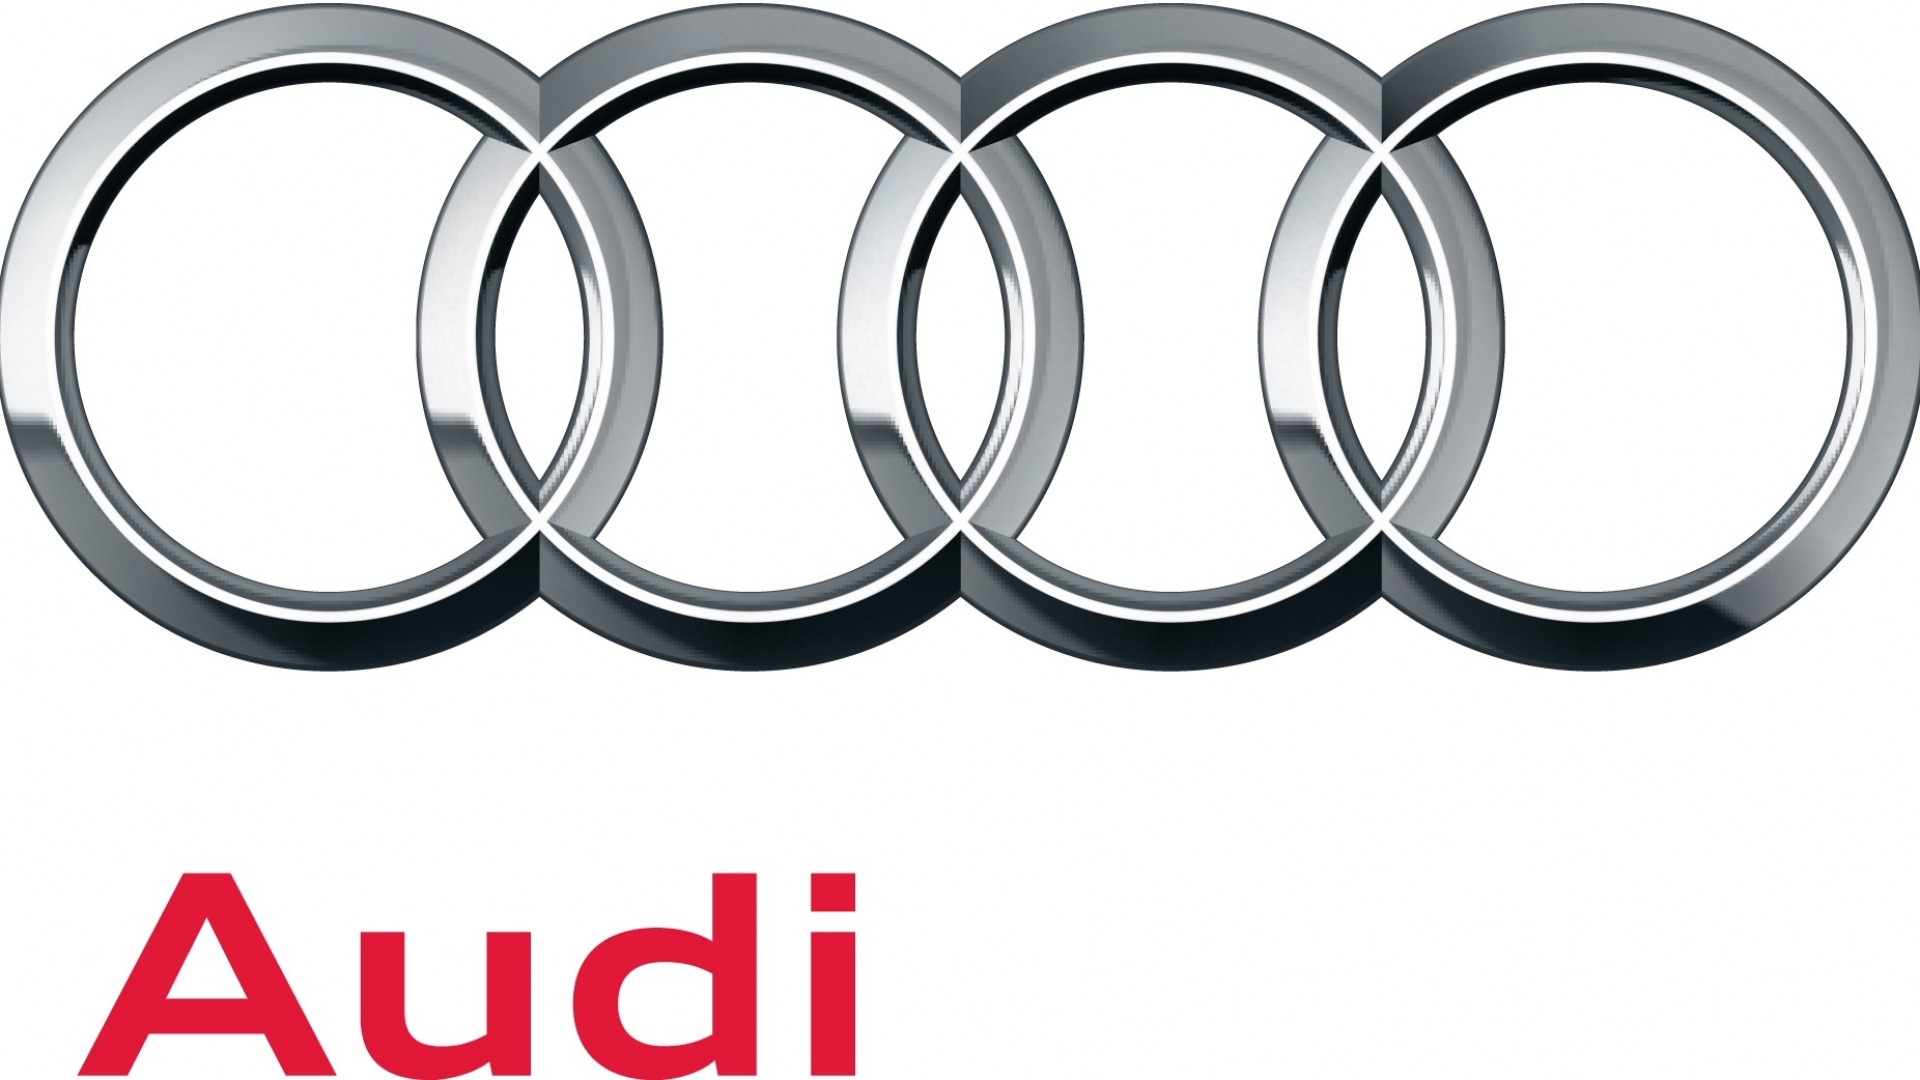 Audi Symbol Images Download